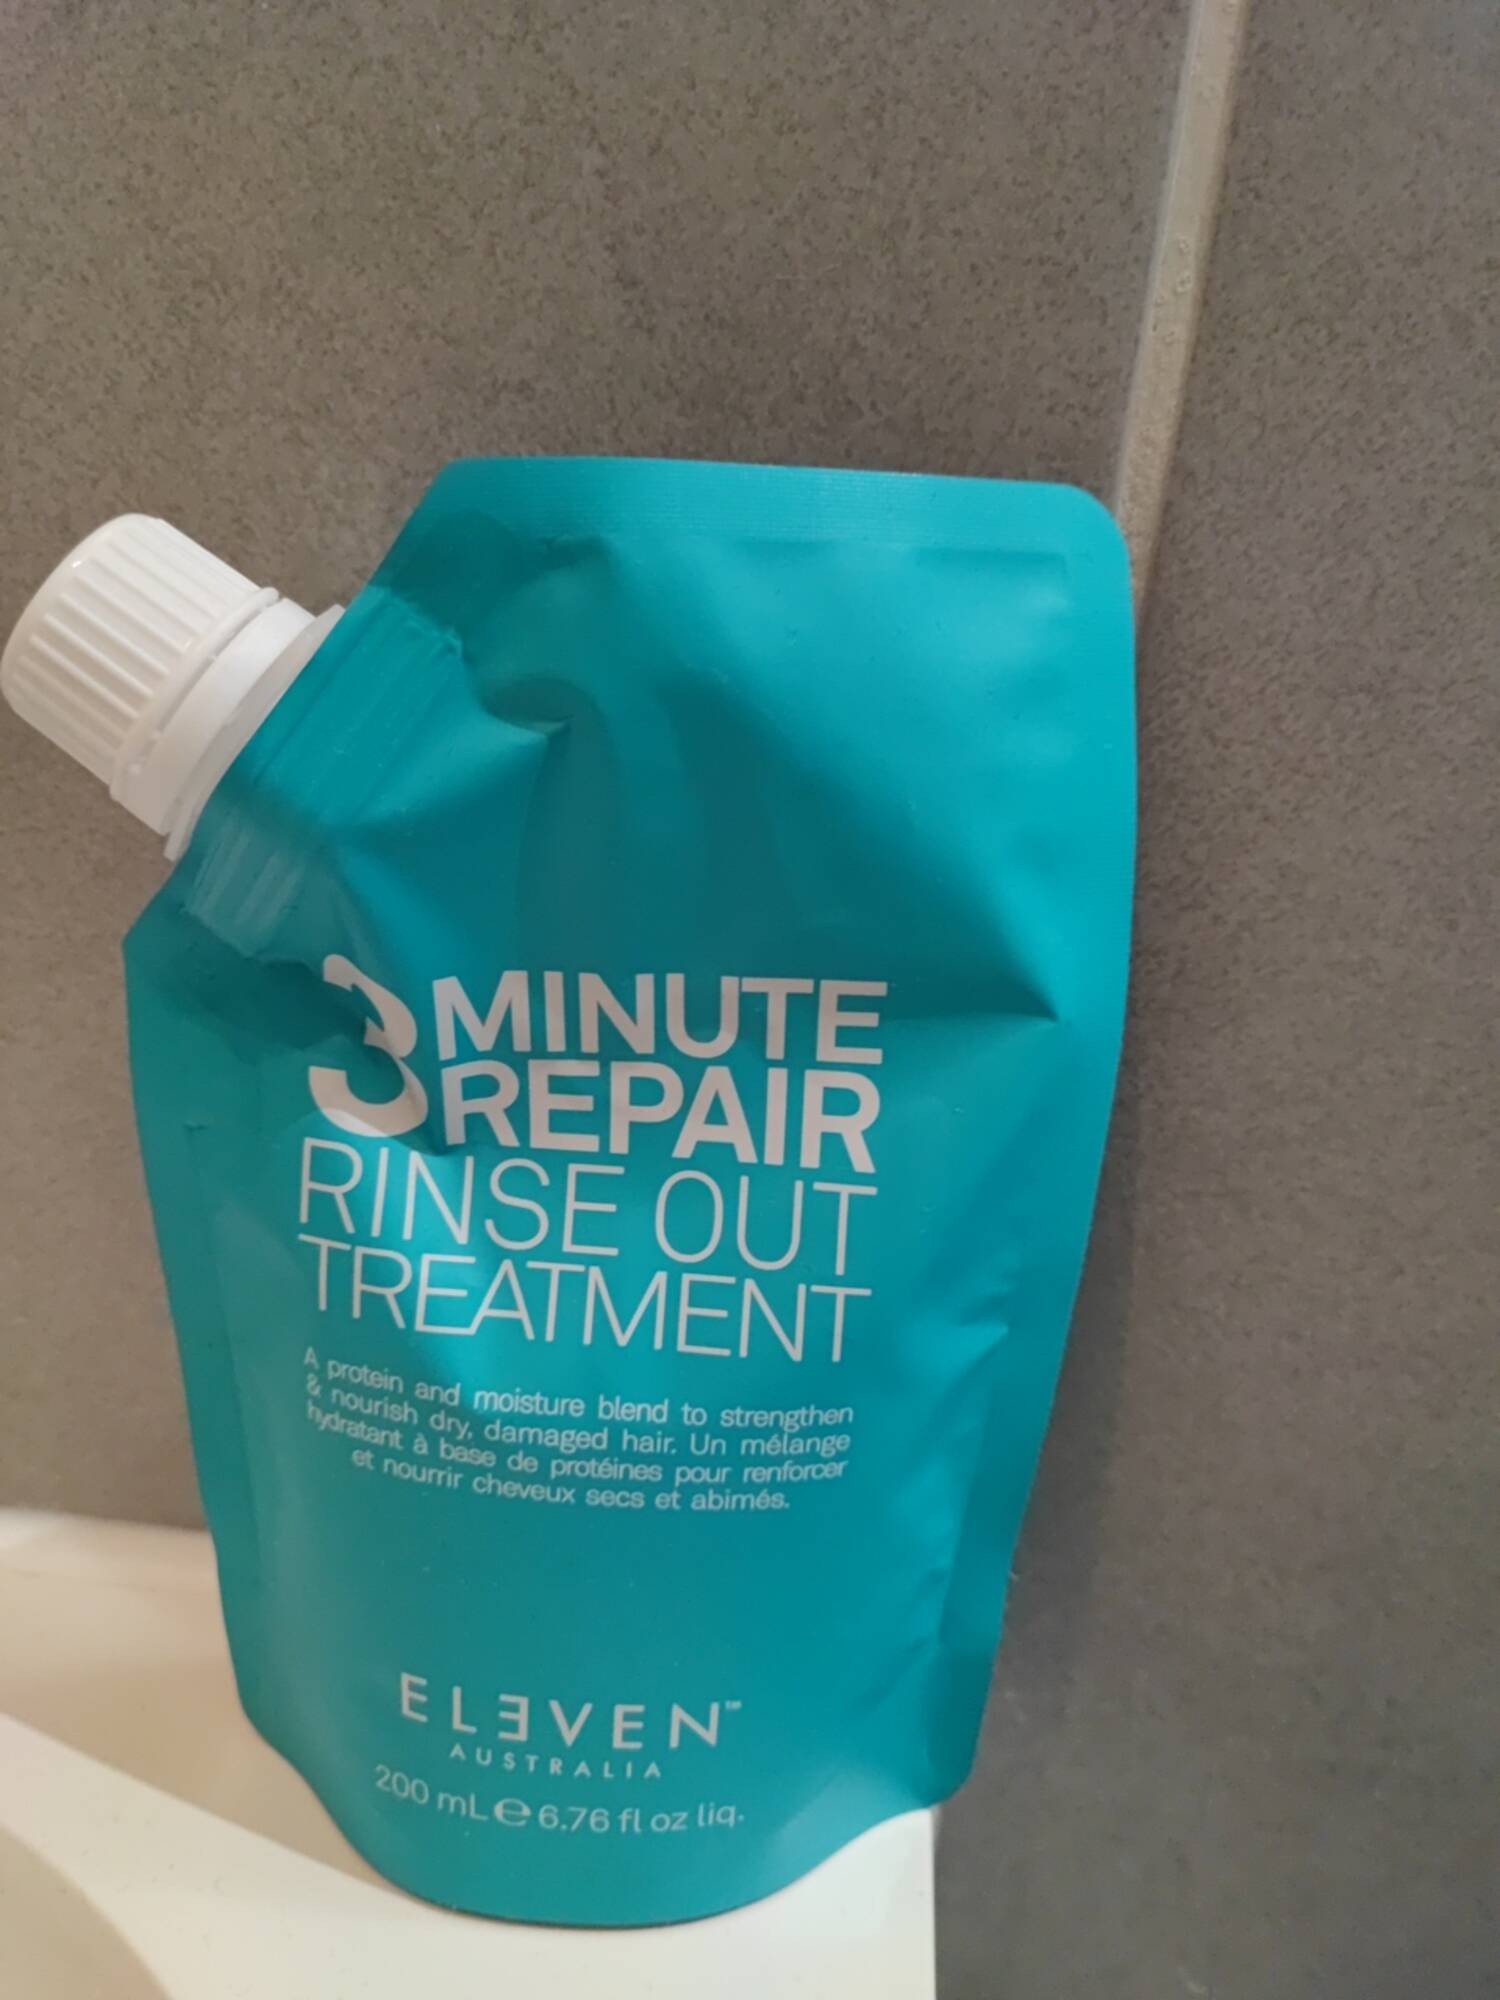 ELEVEN AUSTRALIA - 3 minute repair - Rinse out treatment